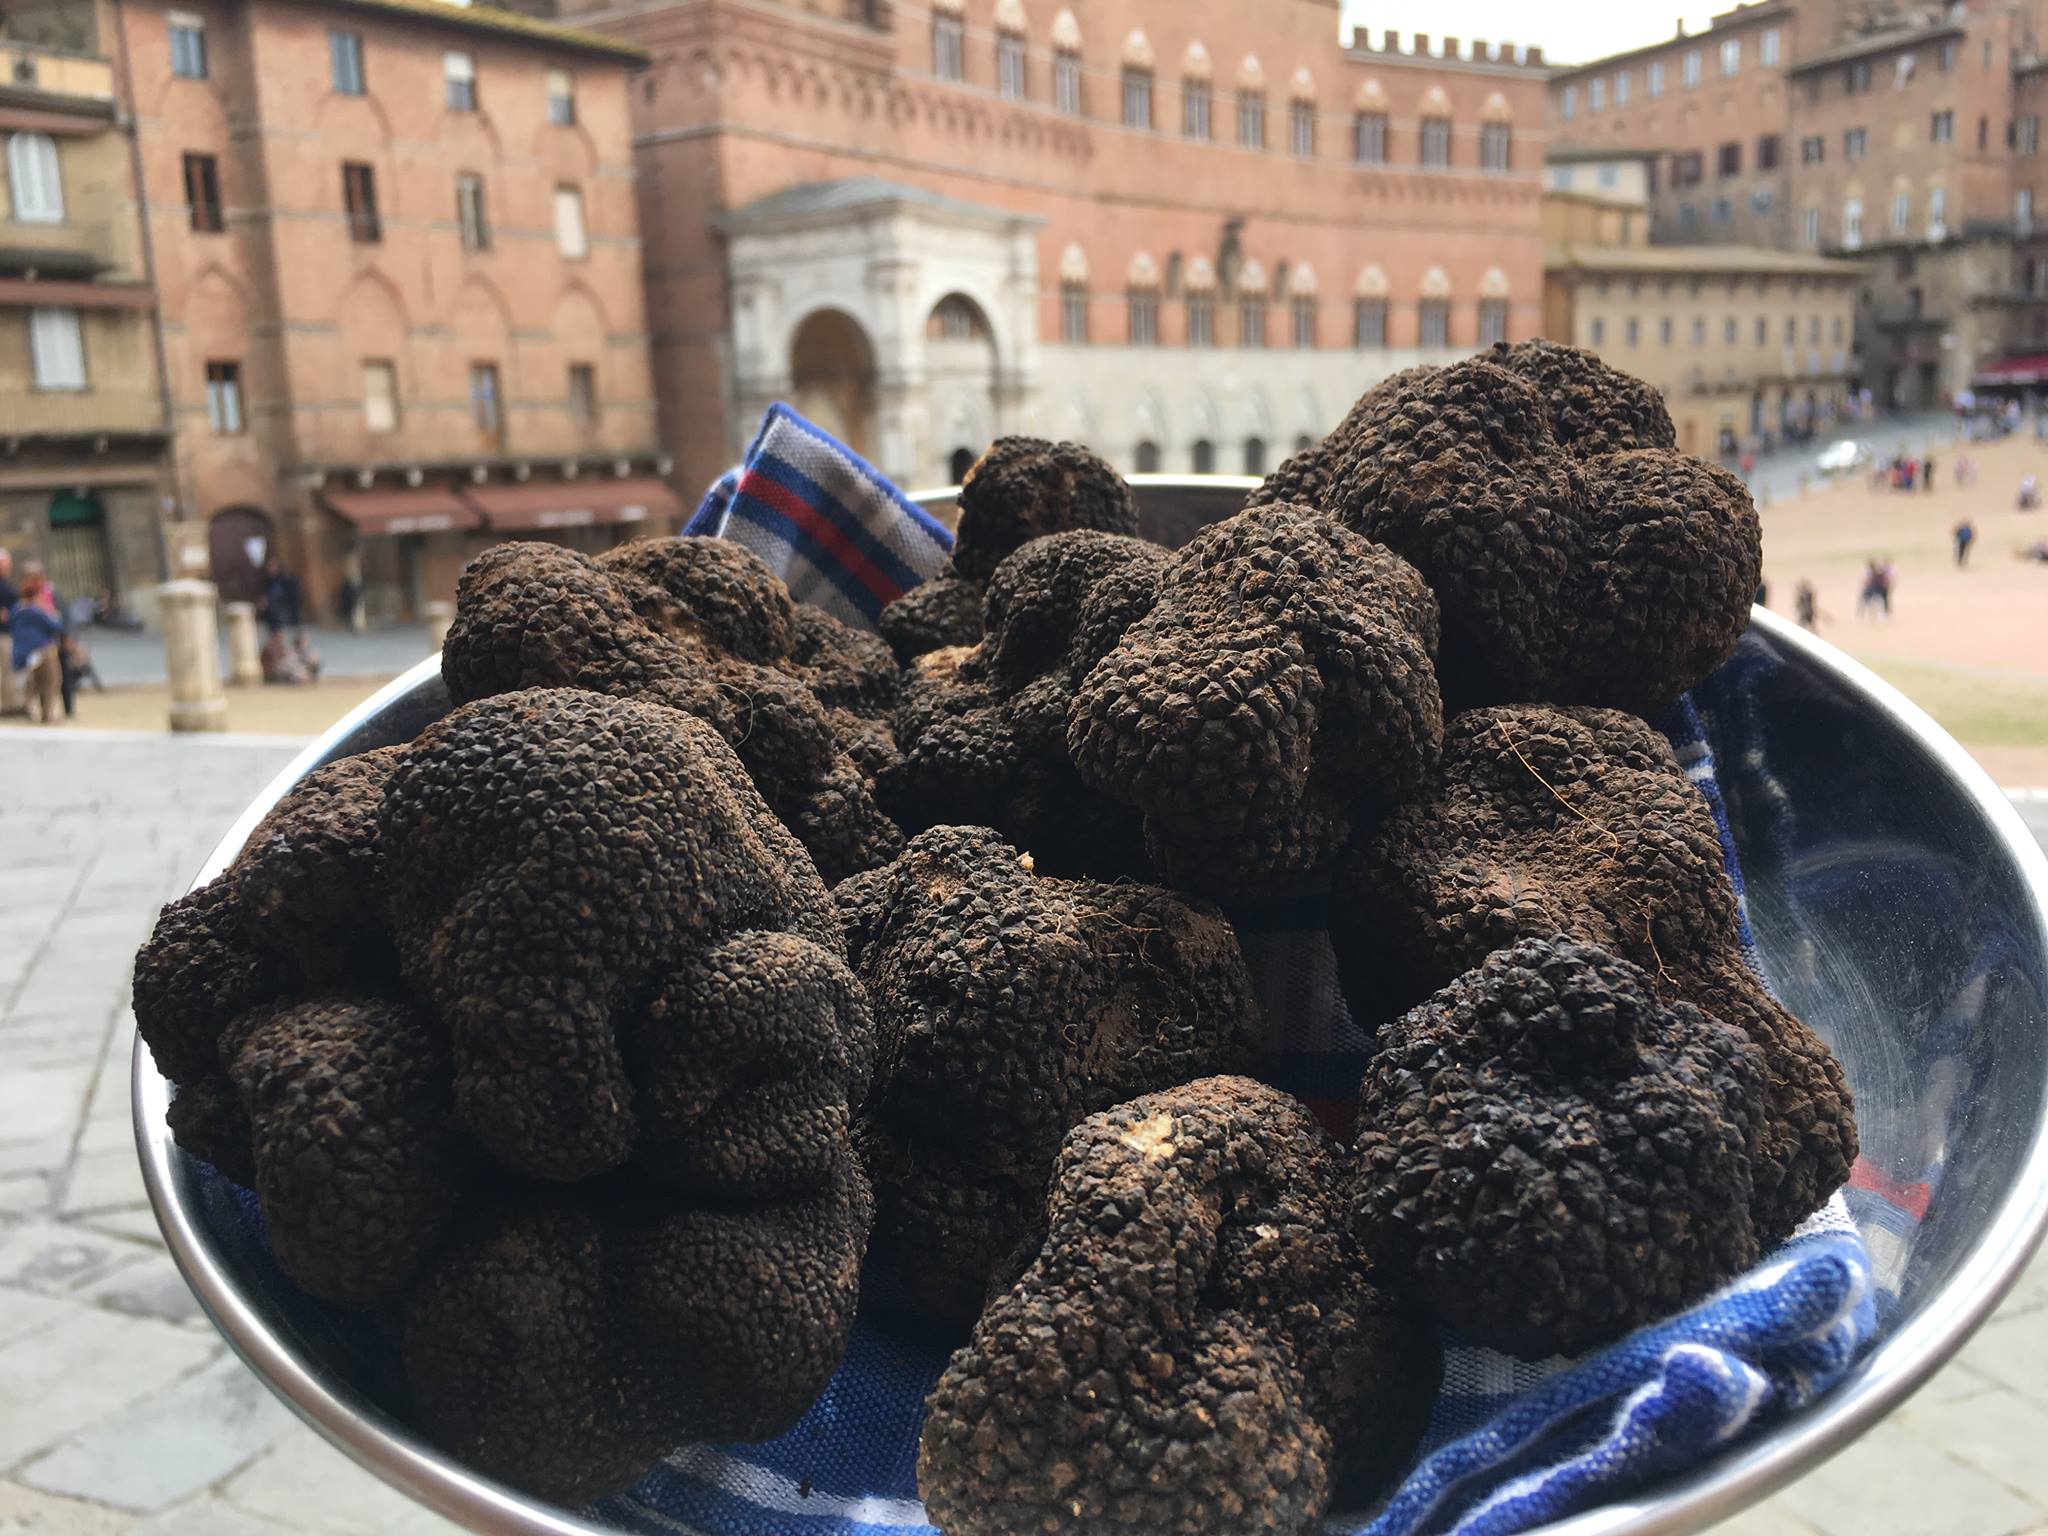 Una raccolta magnifica, esposta in Piazza del Campo a Siena - i tartufi di Siena Tartufi - Toscana truffle hunting